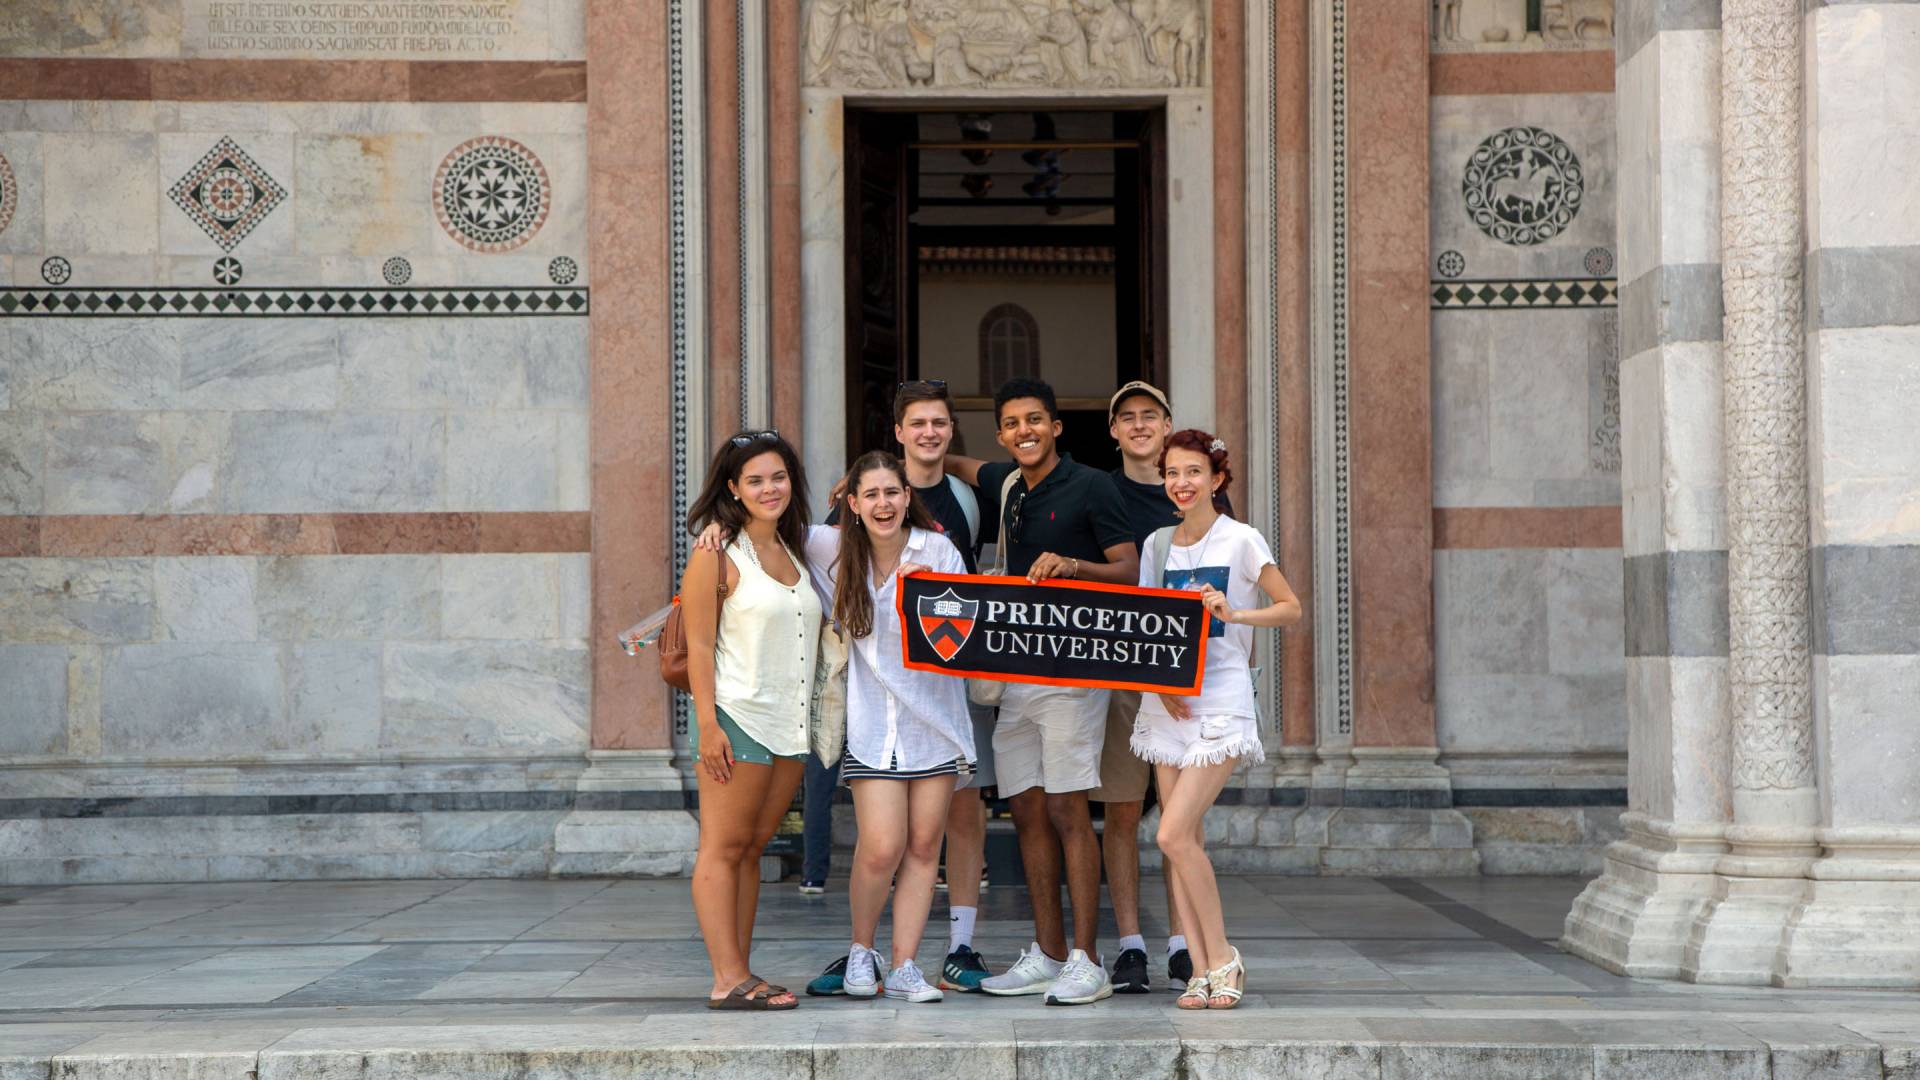 Students standing holding Princeton University banner